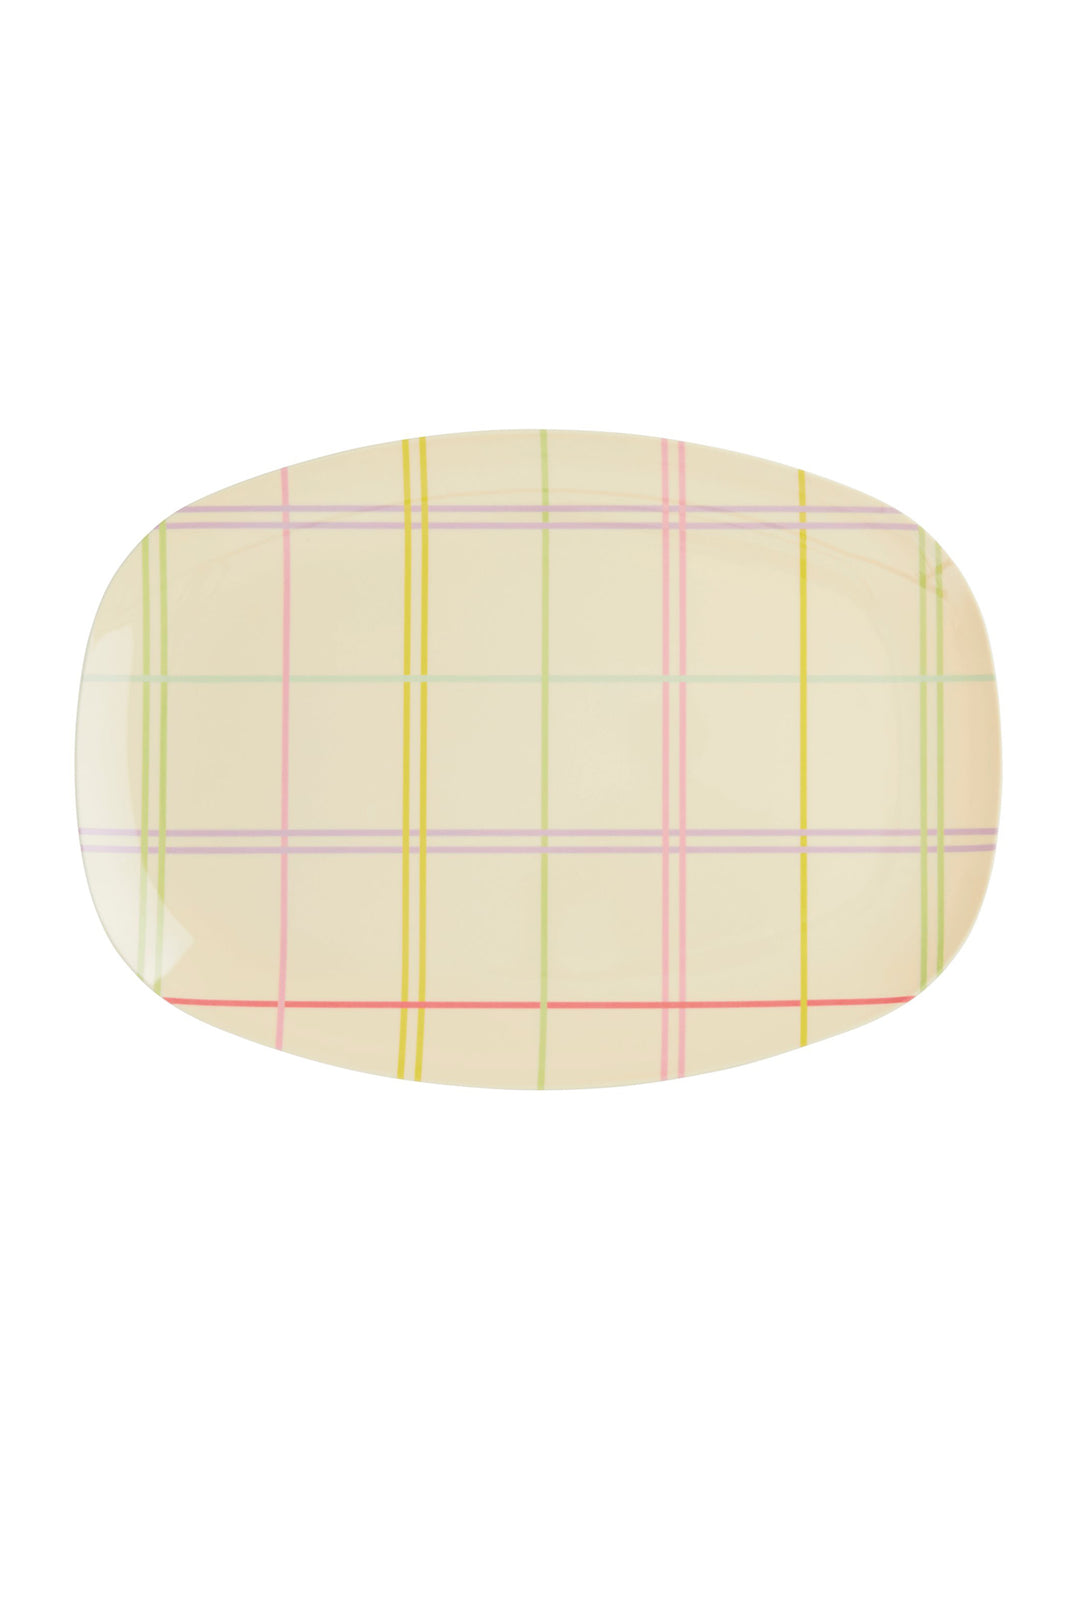 Multicoloured Check Rectangular Small Melamine Plate